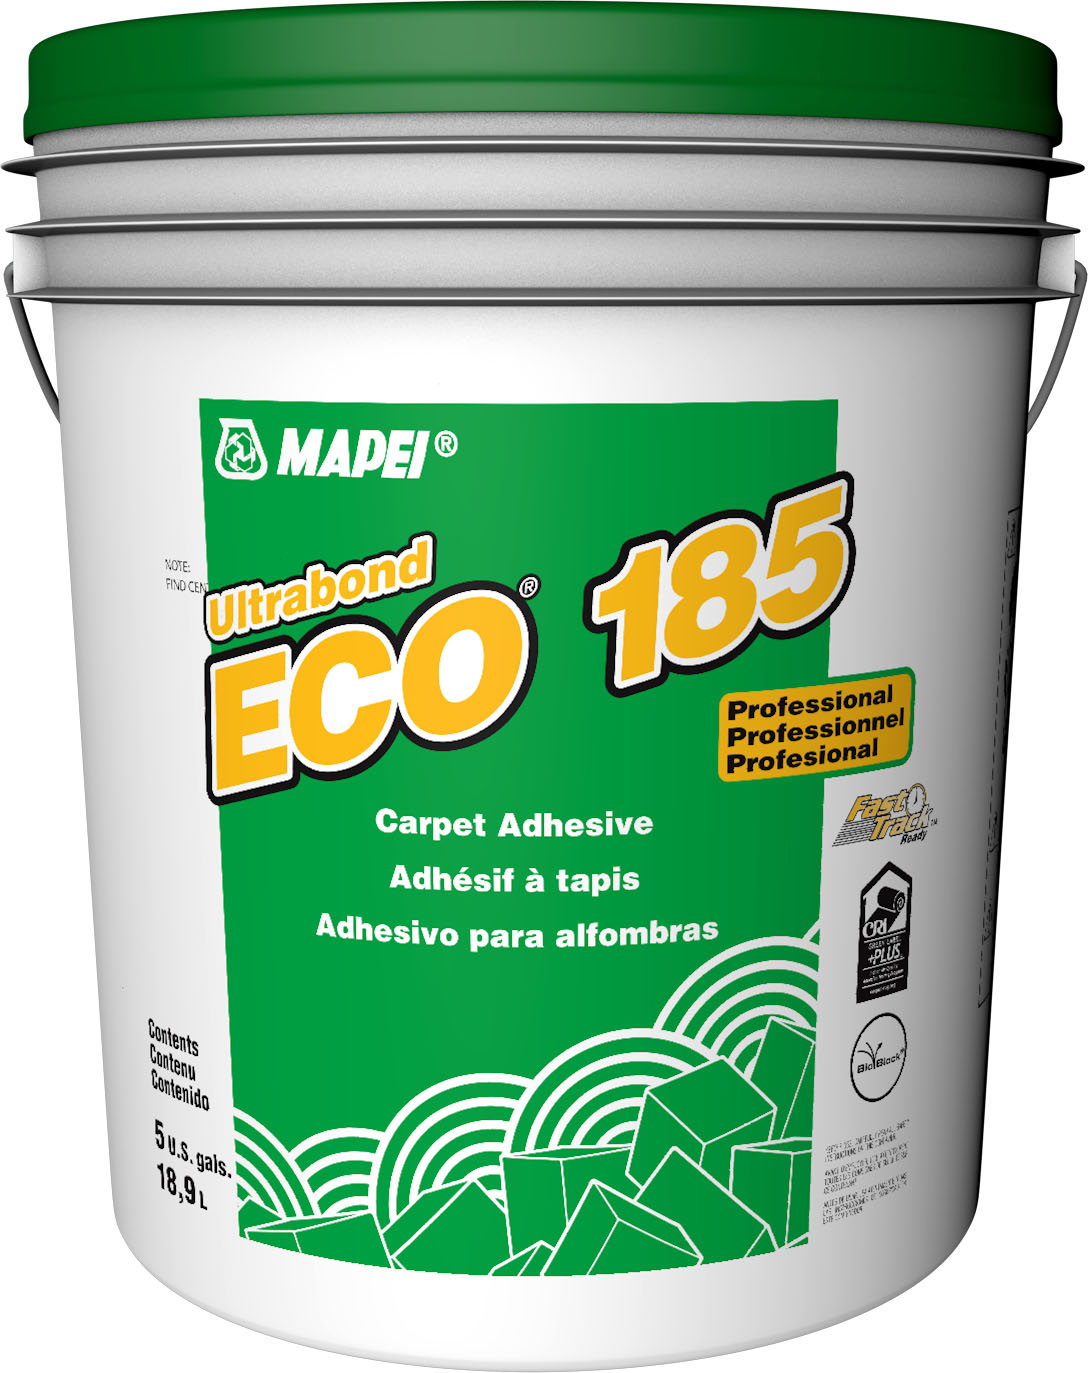 Mapei (96818000) product